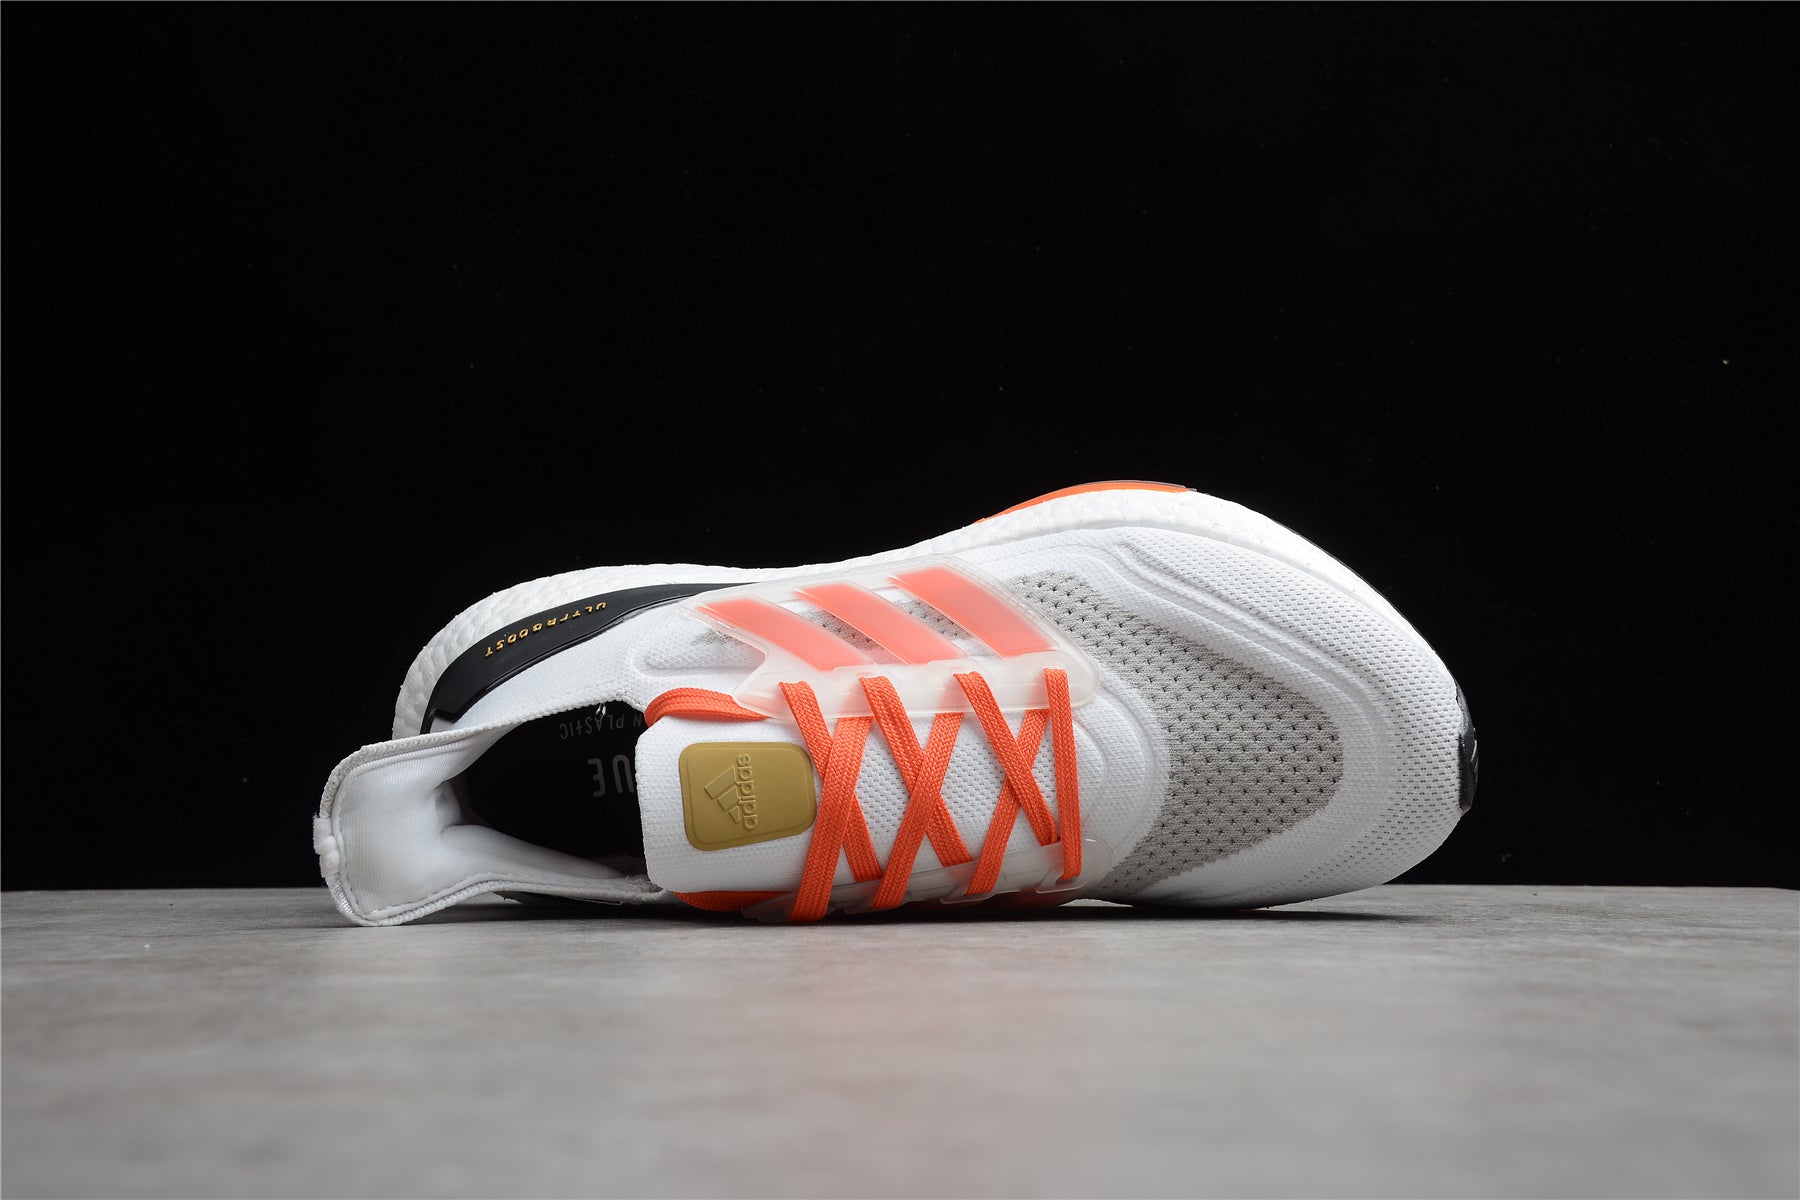 Adidas ultraboost white/orange/black shoes